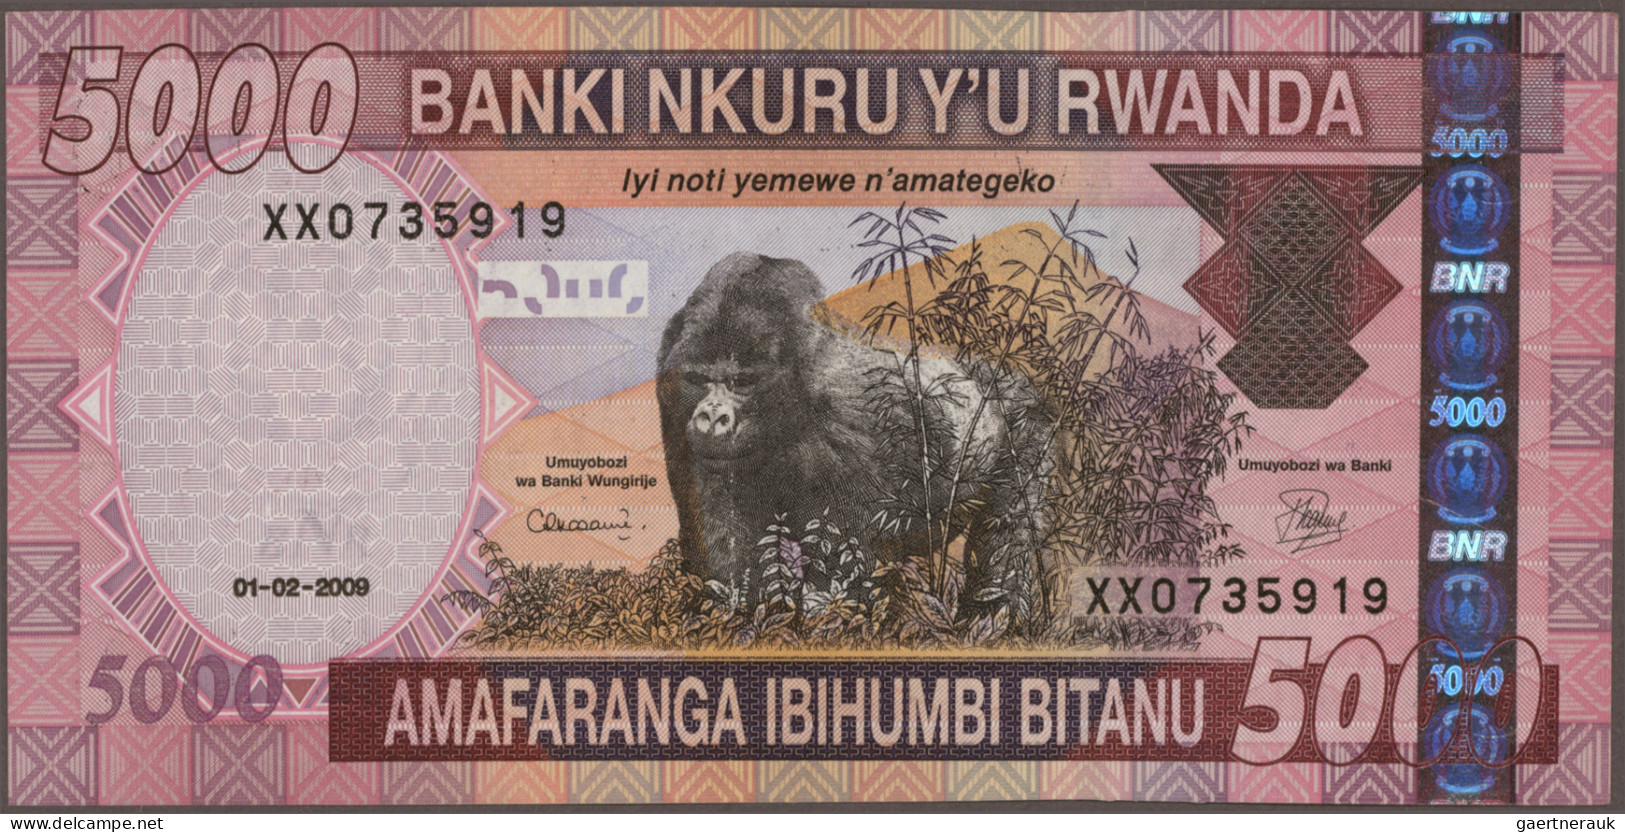 Rwanda: Banque Nationale du Rwanda, huge lot with 26 banknotes, series 1964-2009